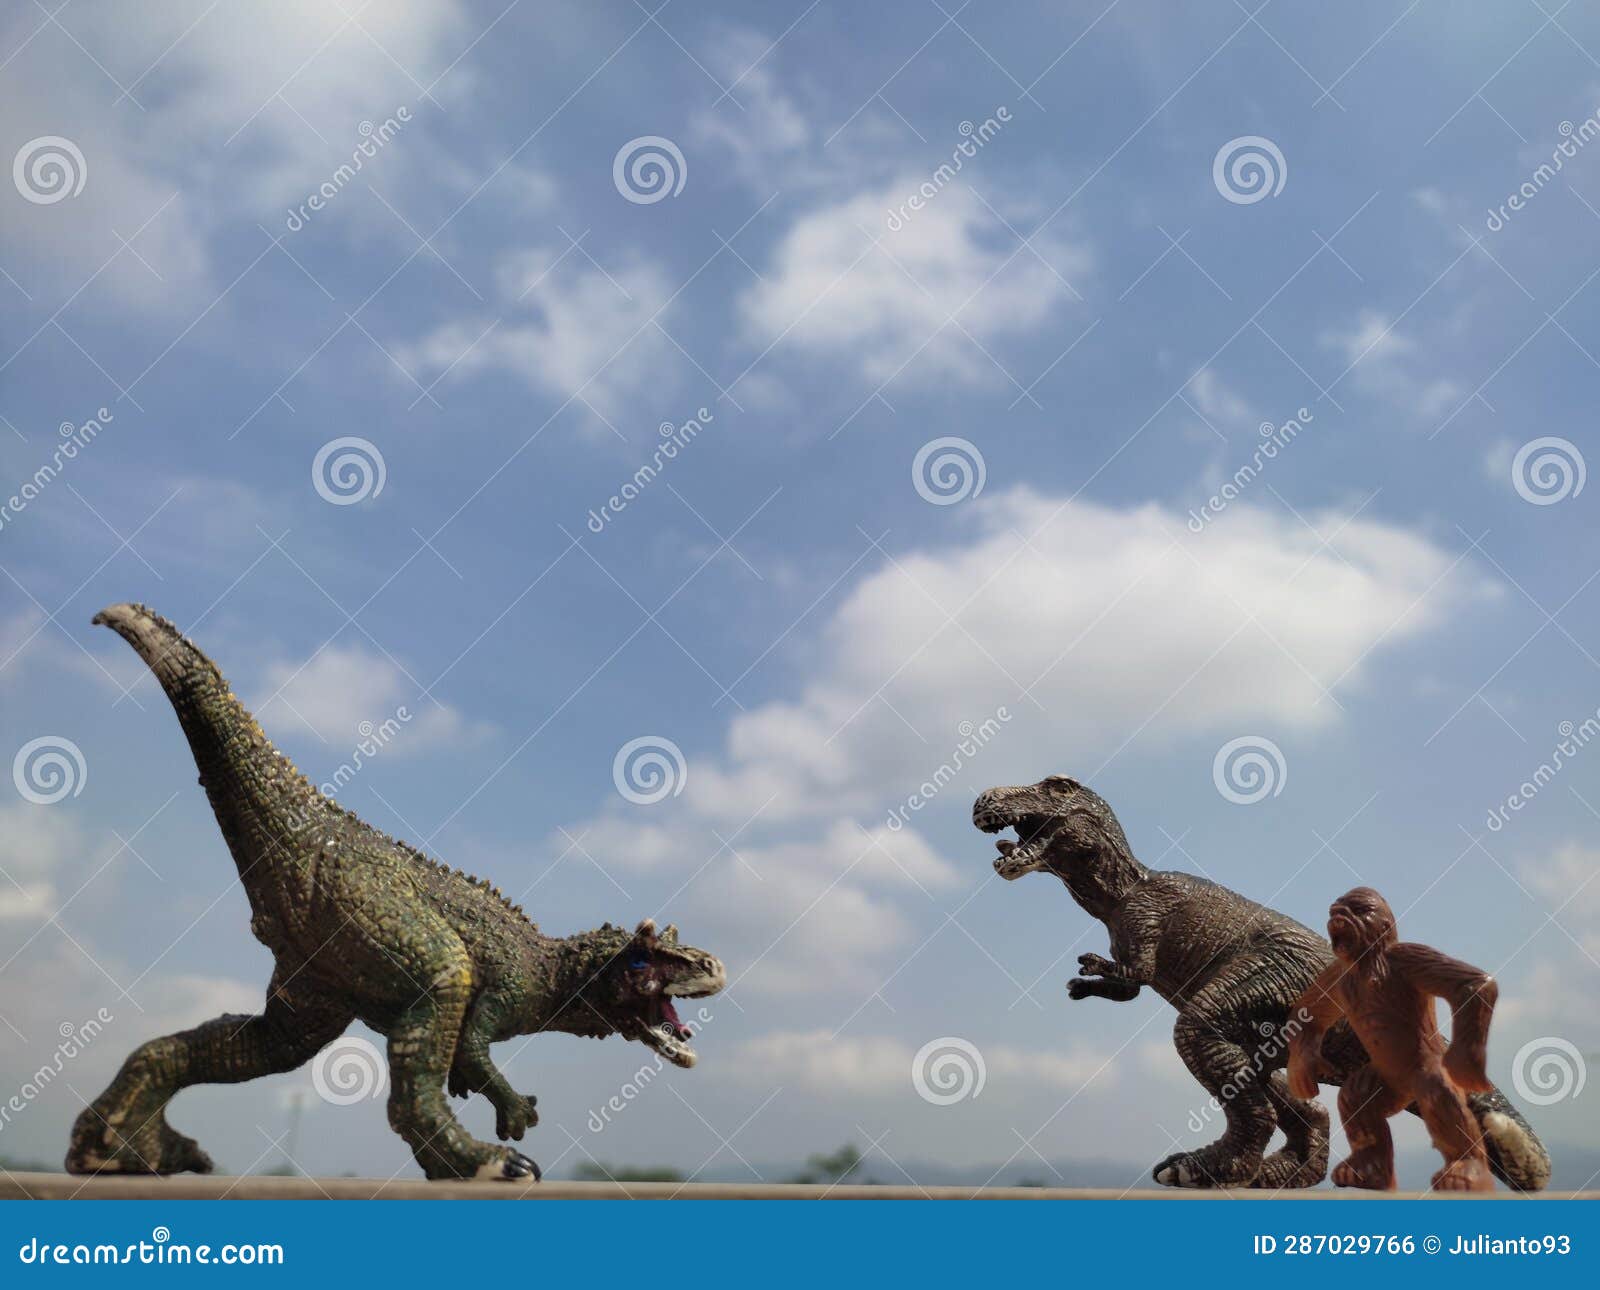 dinosaurs were the dominant vertebrates in the mesozoic era, toys 